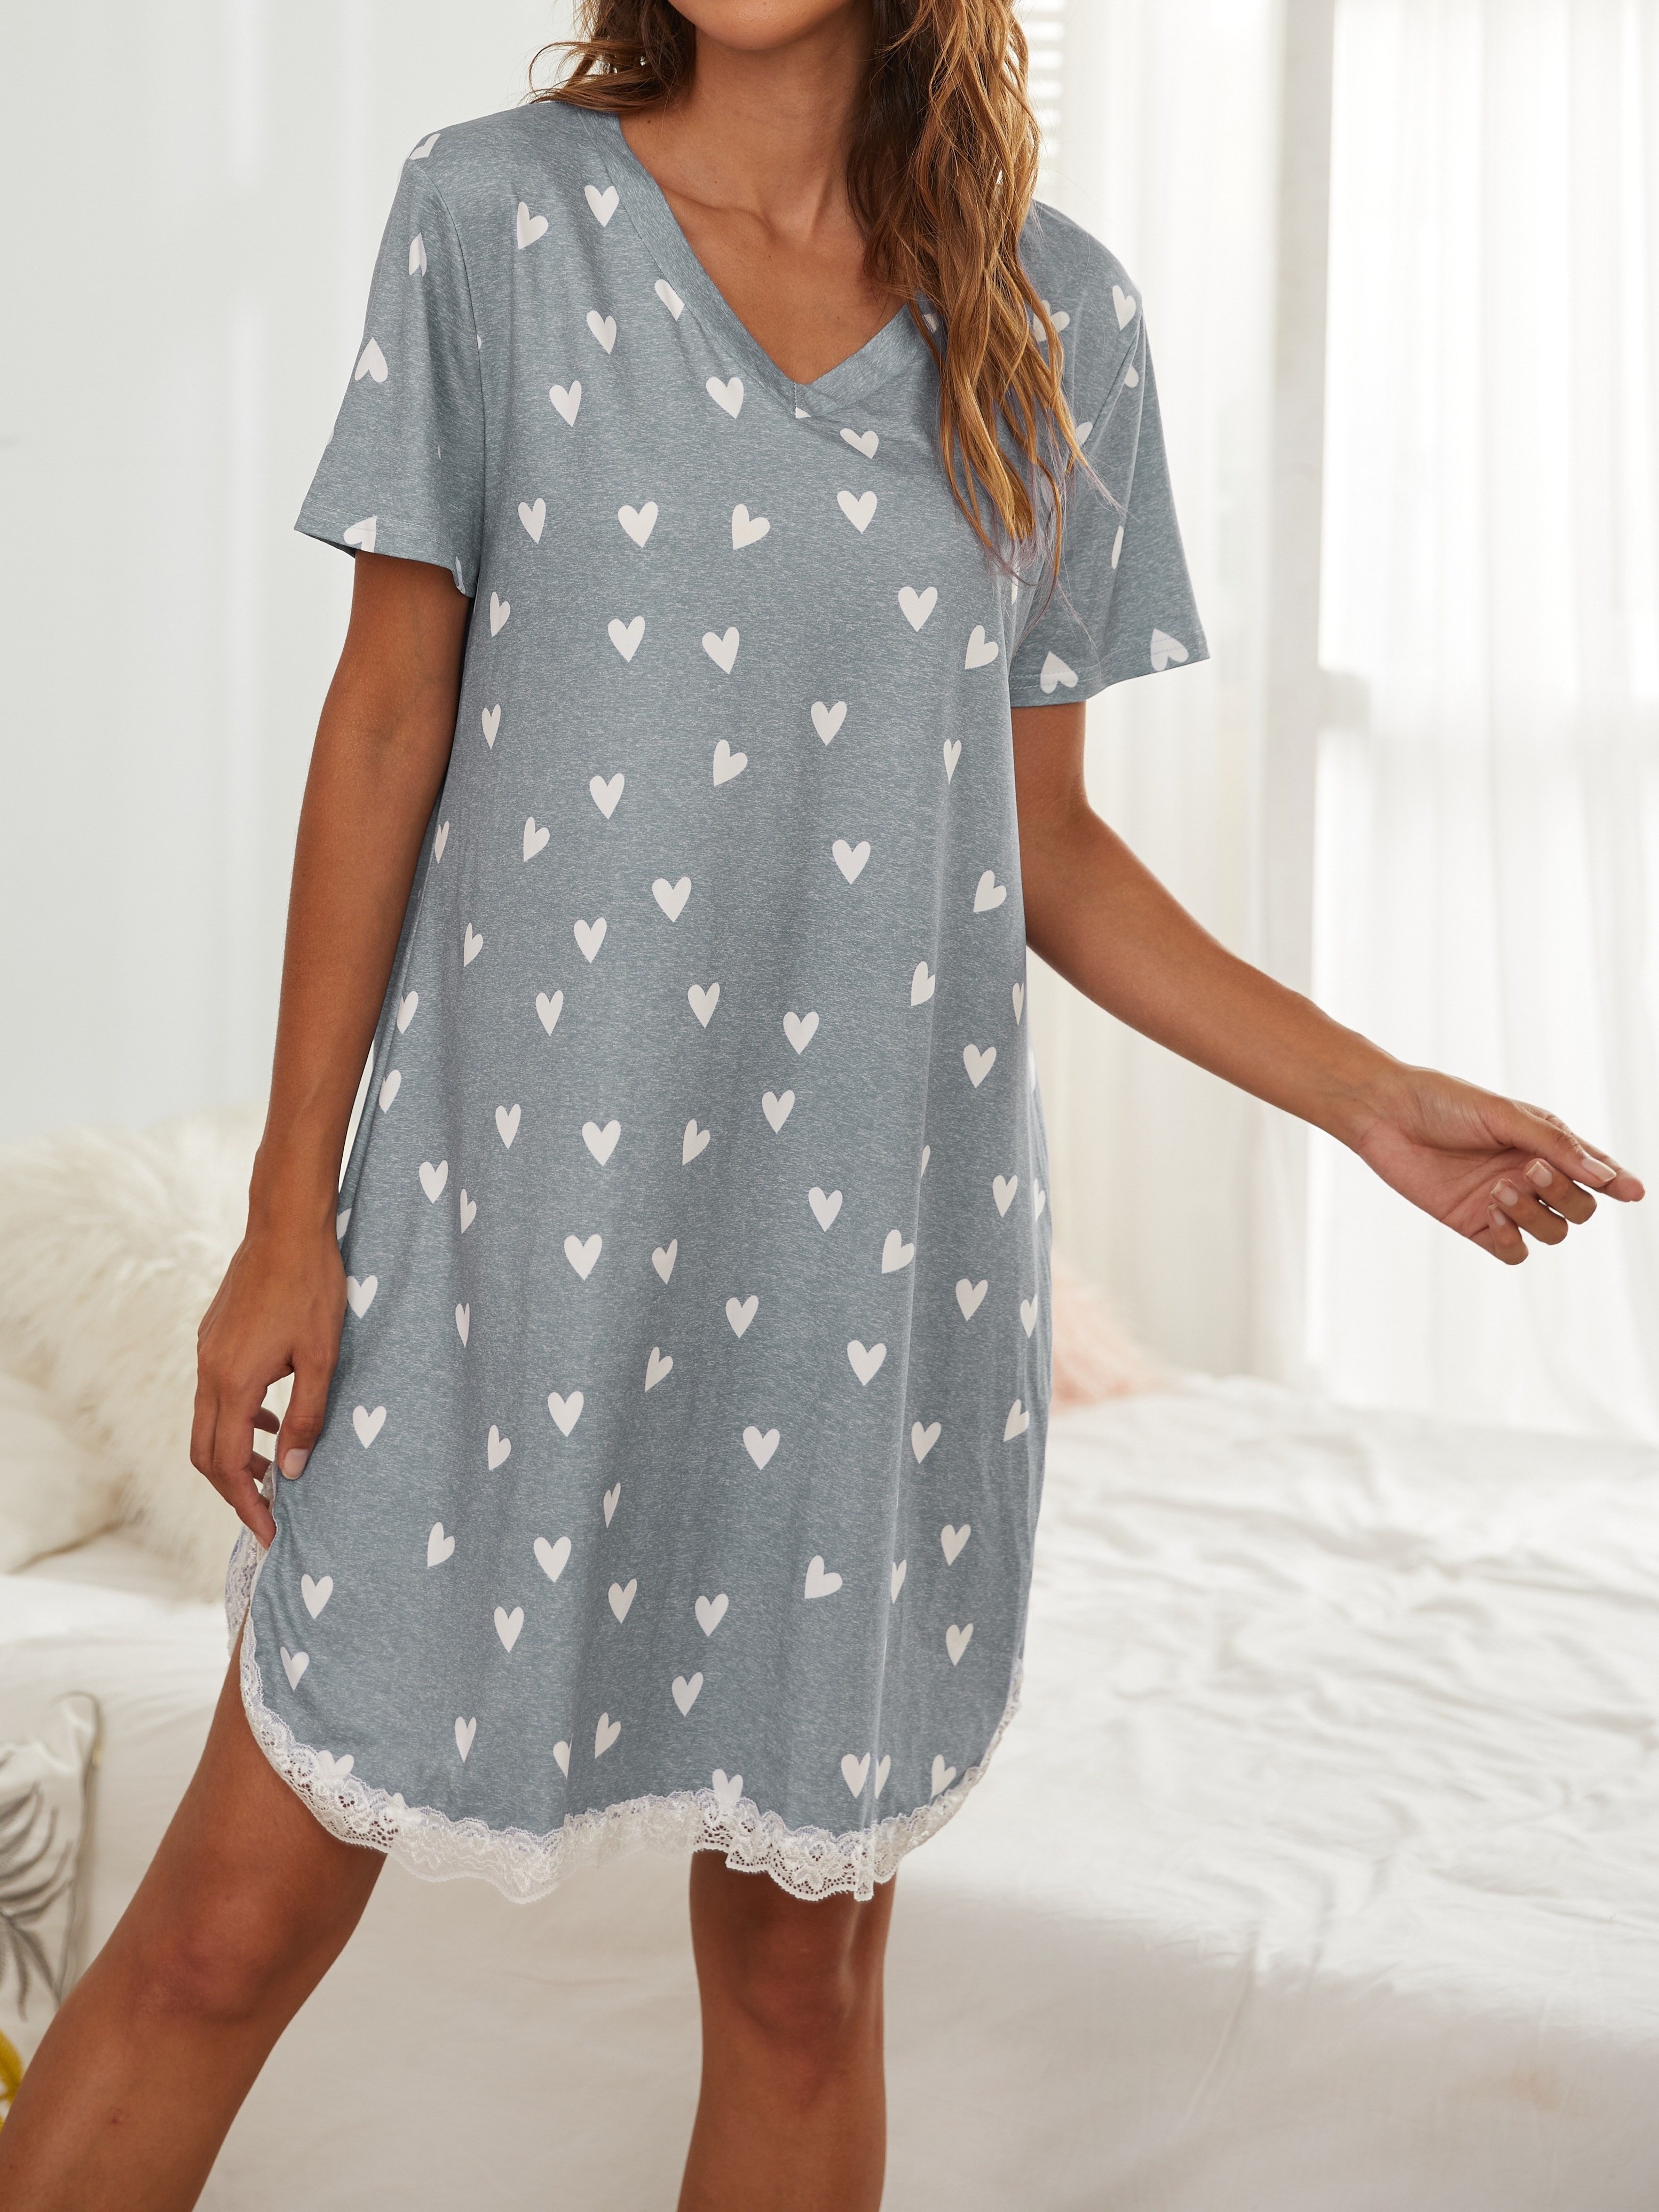 Women's Sleeveless Oversize Sleep Shirt Nightgown Cotton Nightshirt Dress  Wear